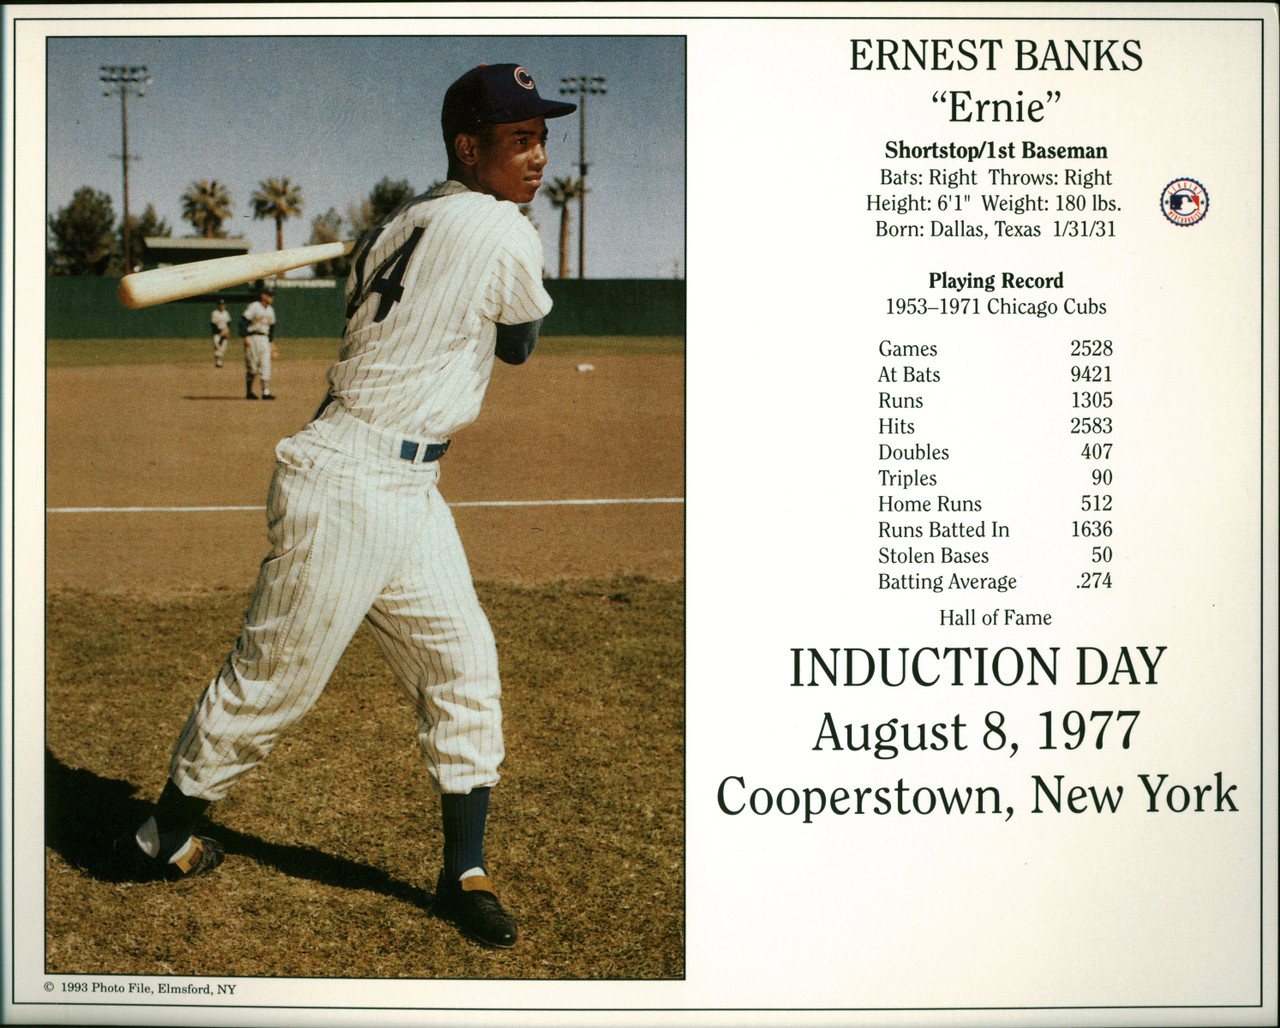 Ernie Banks - Chicago Cubs Shortstop